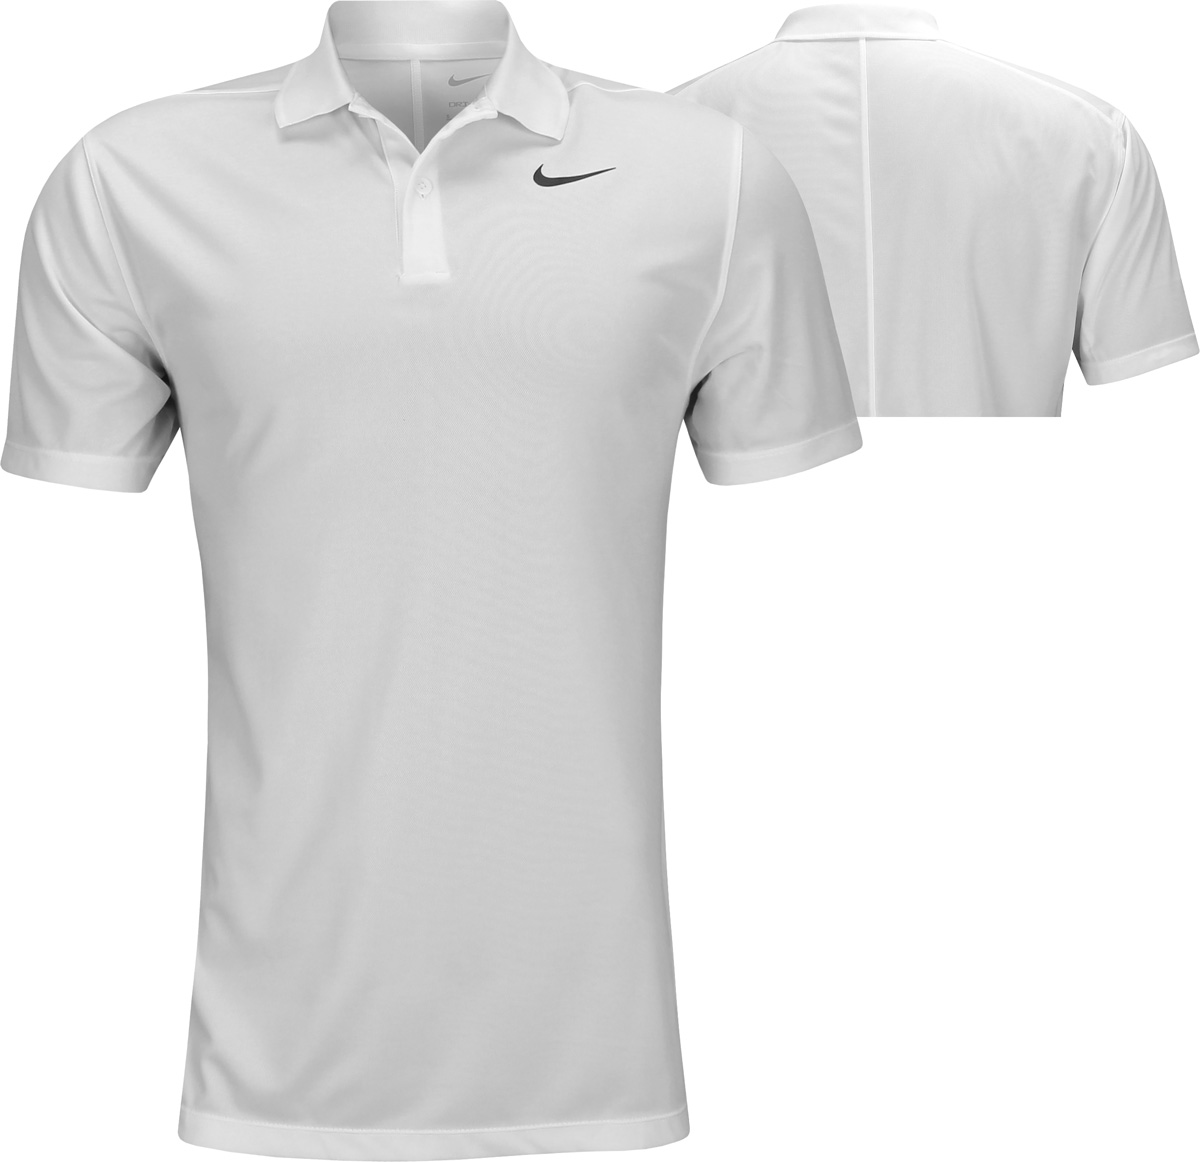 verkwistend Politiebureau hoeveelheid verkoop Nike Dri-FIT Victory Solid Golf Shirts